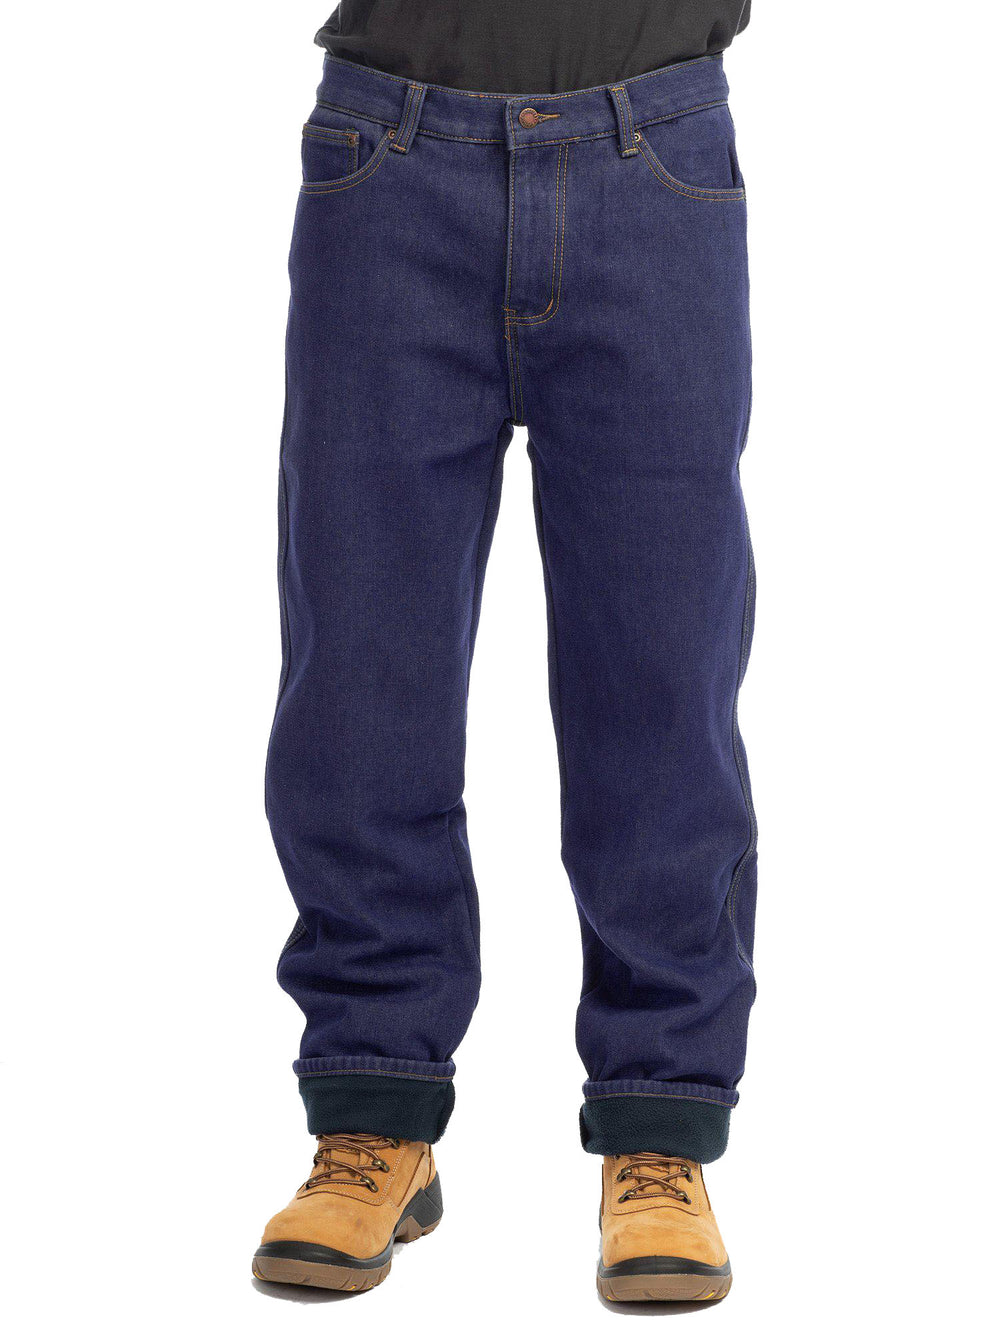 Full Blue Mens 5 Pocket Flannel Lined Jeans 